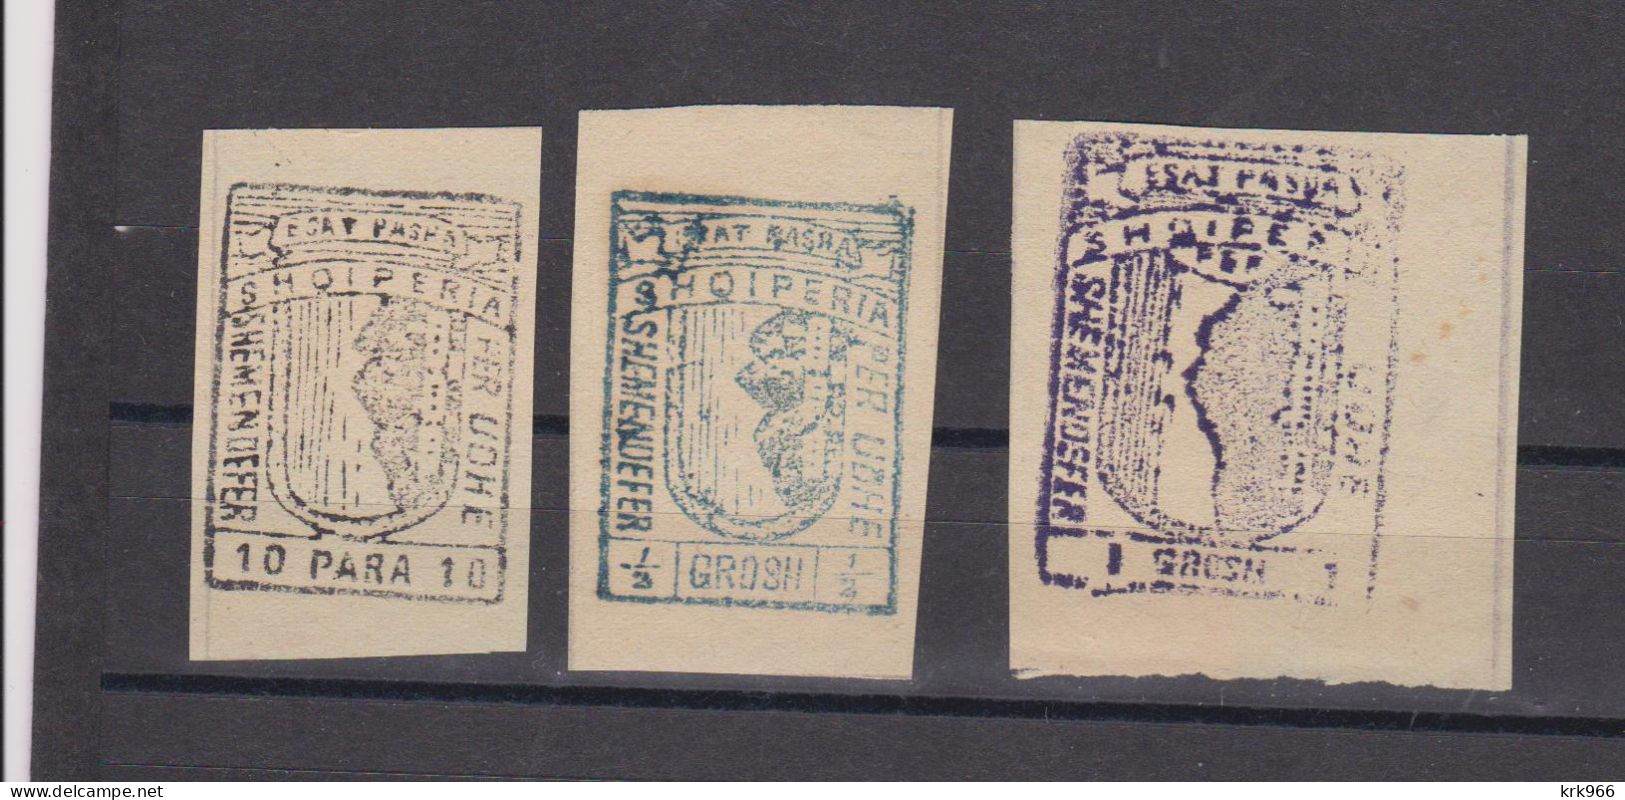 ALBANIA,, 1914,ESAT PASHA Revenue Stamp Used As Paper Money 1/2 Grosh , 1 Grosh ,10 Para - Albania